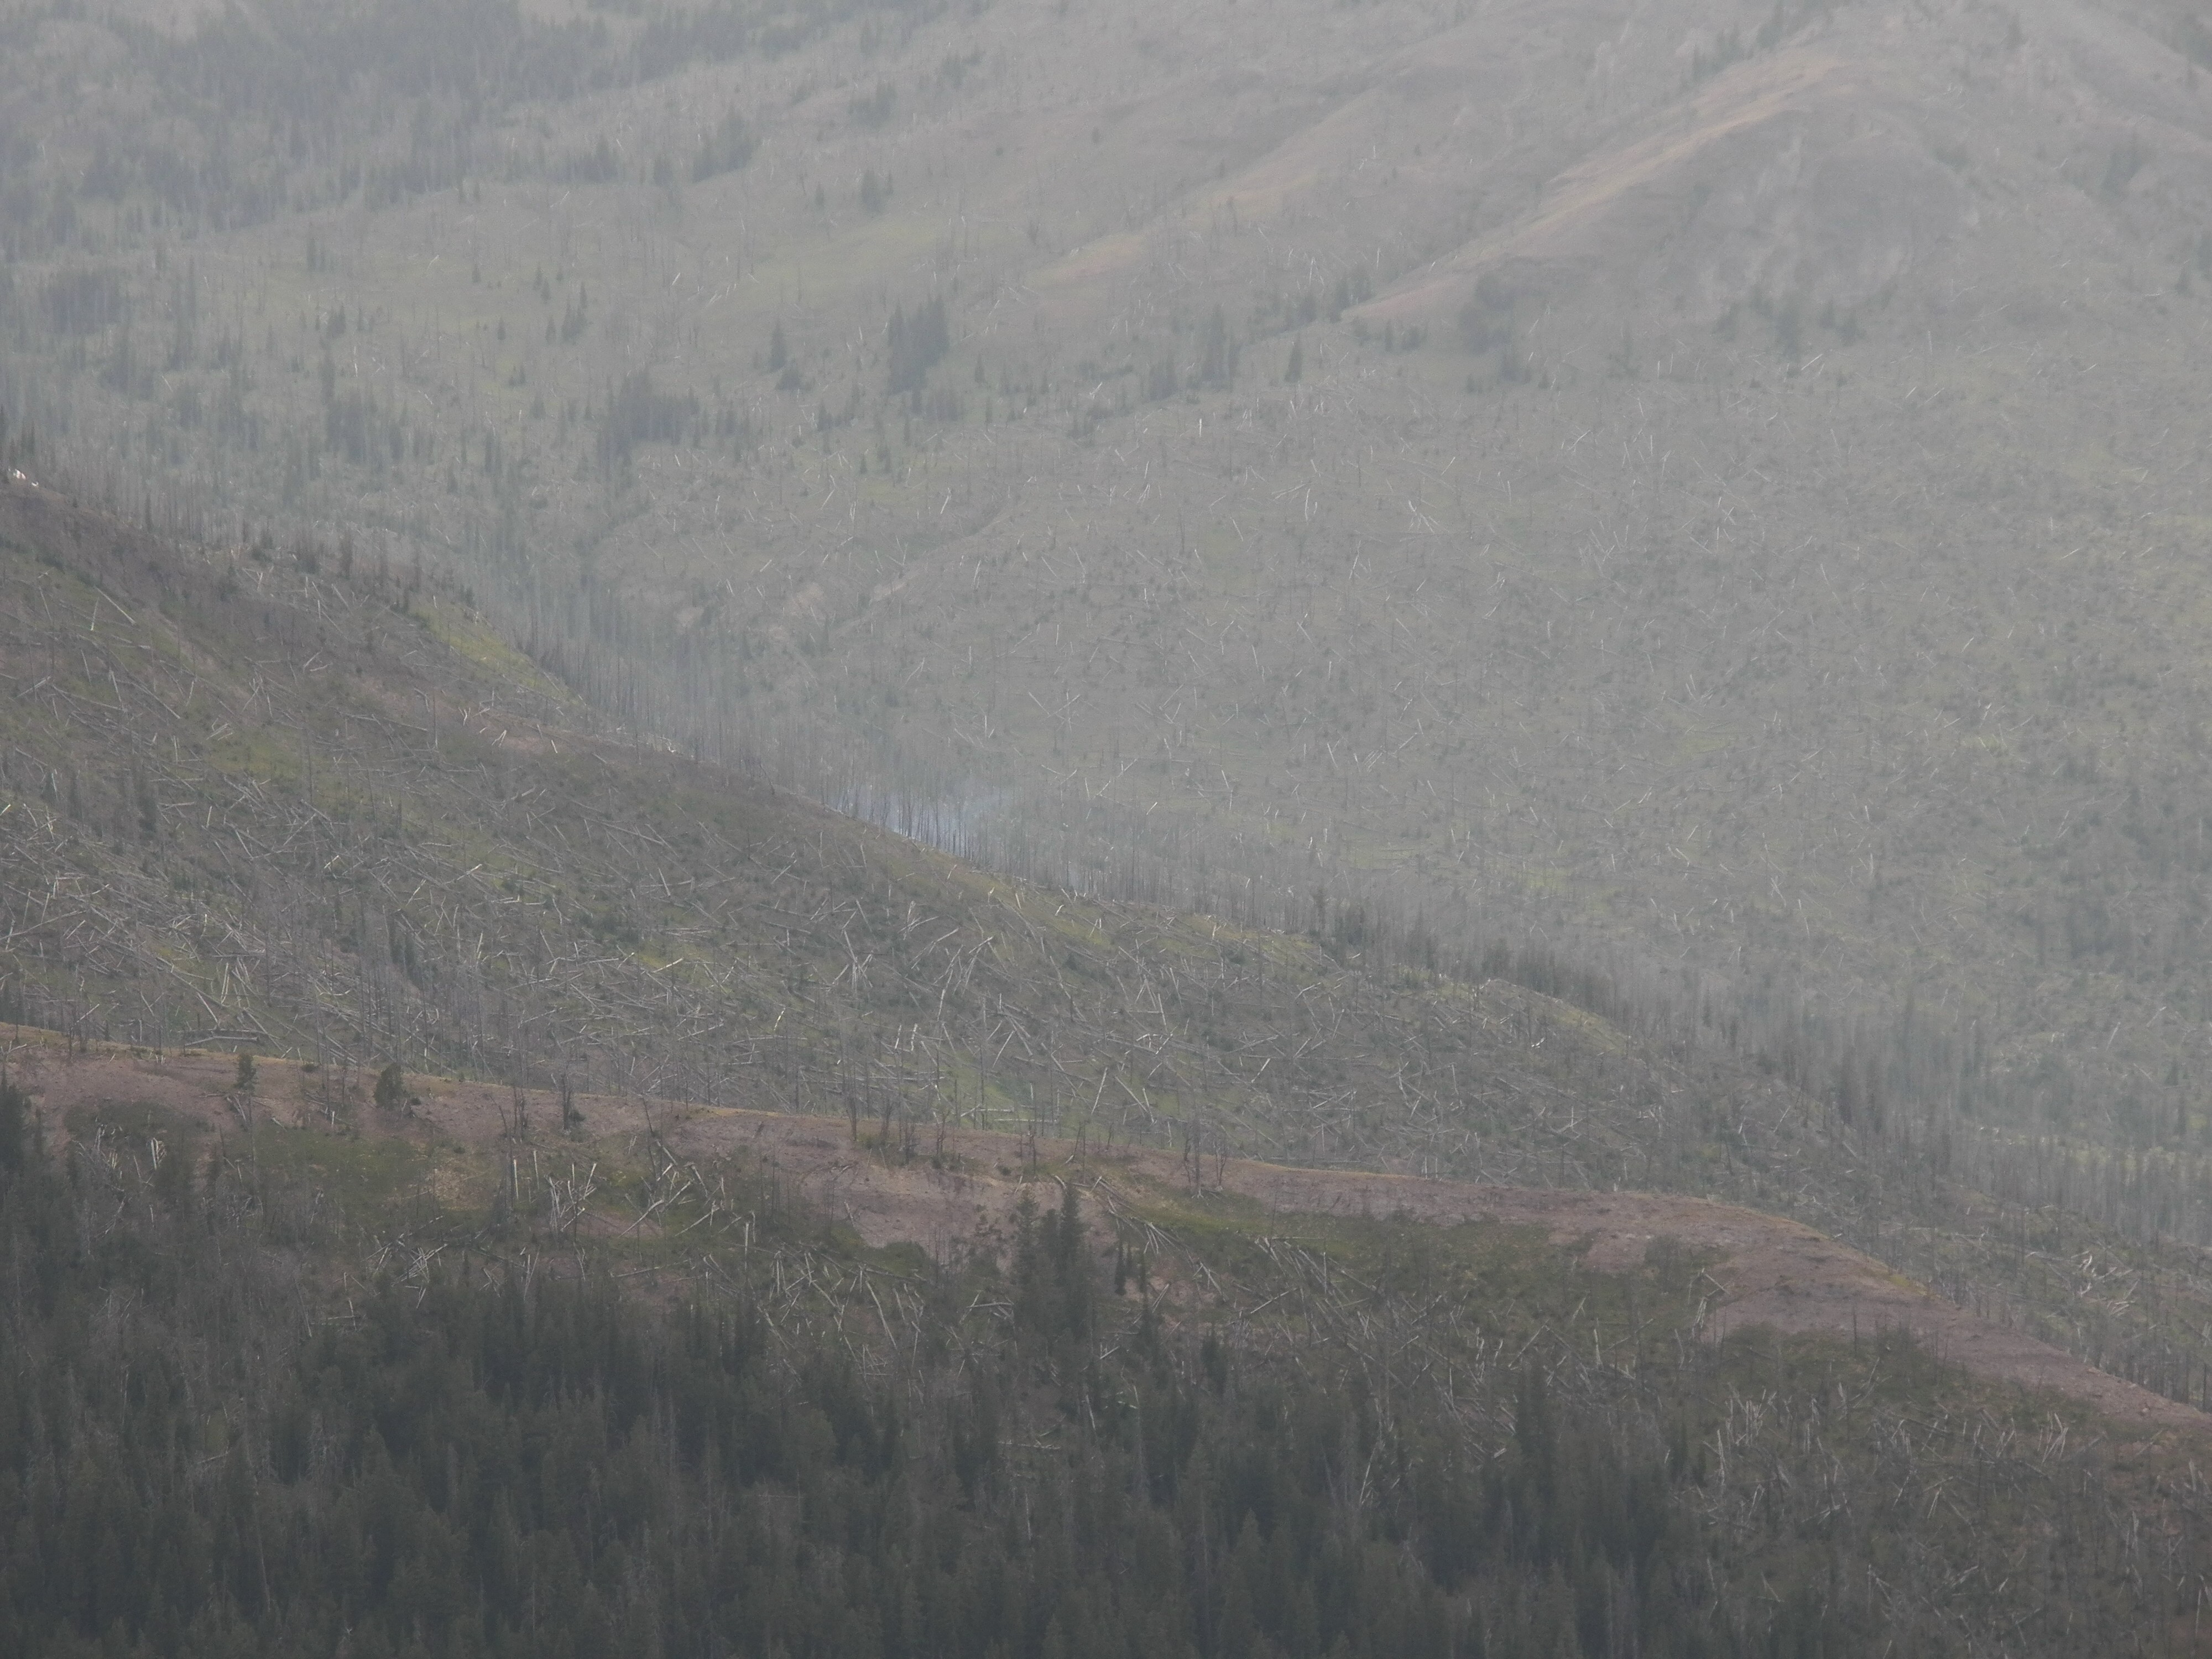 Smoke rising from a canyon